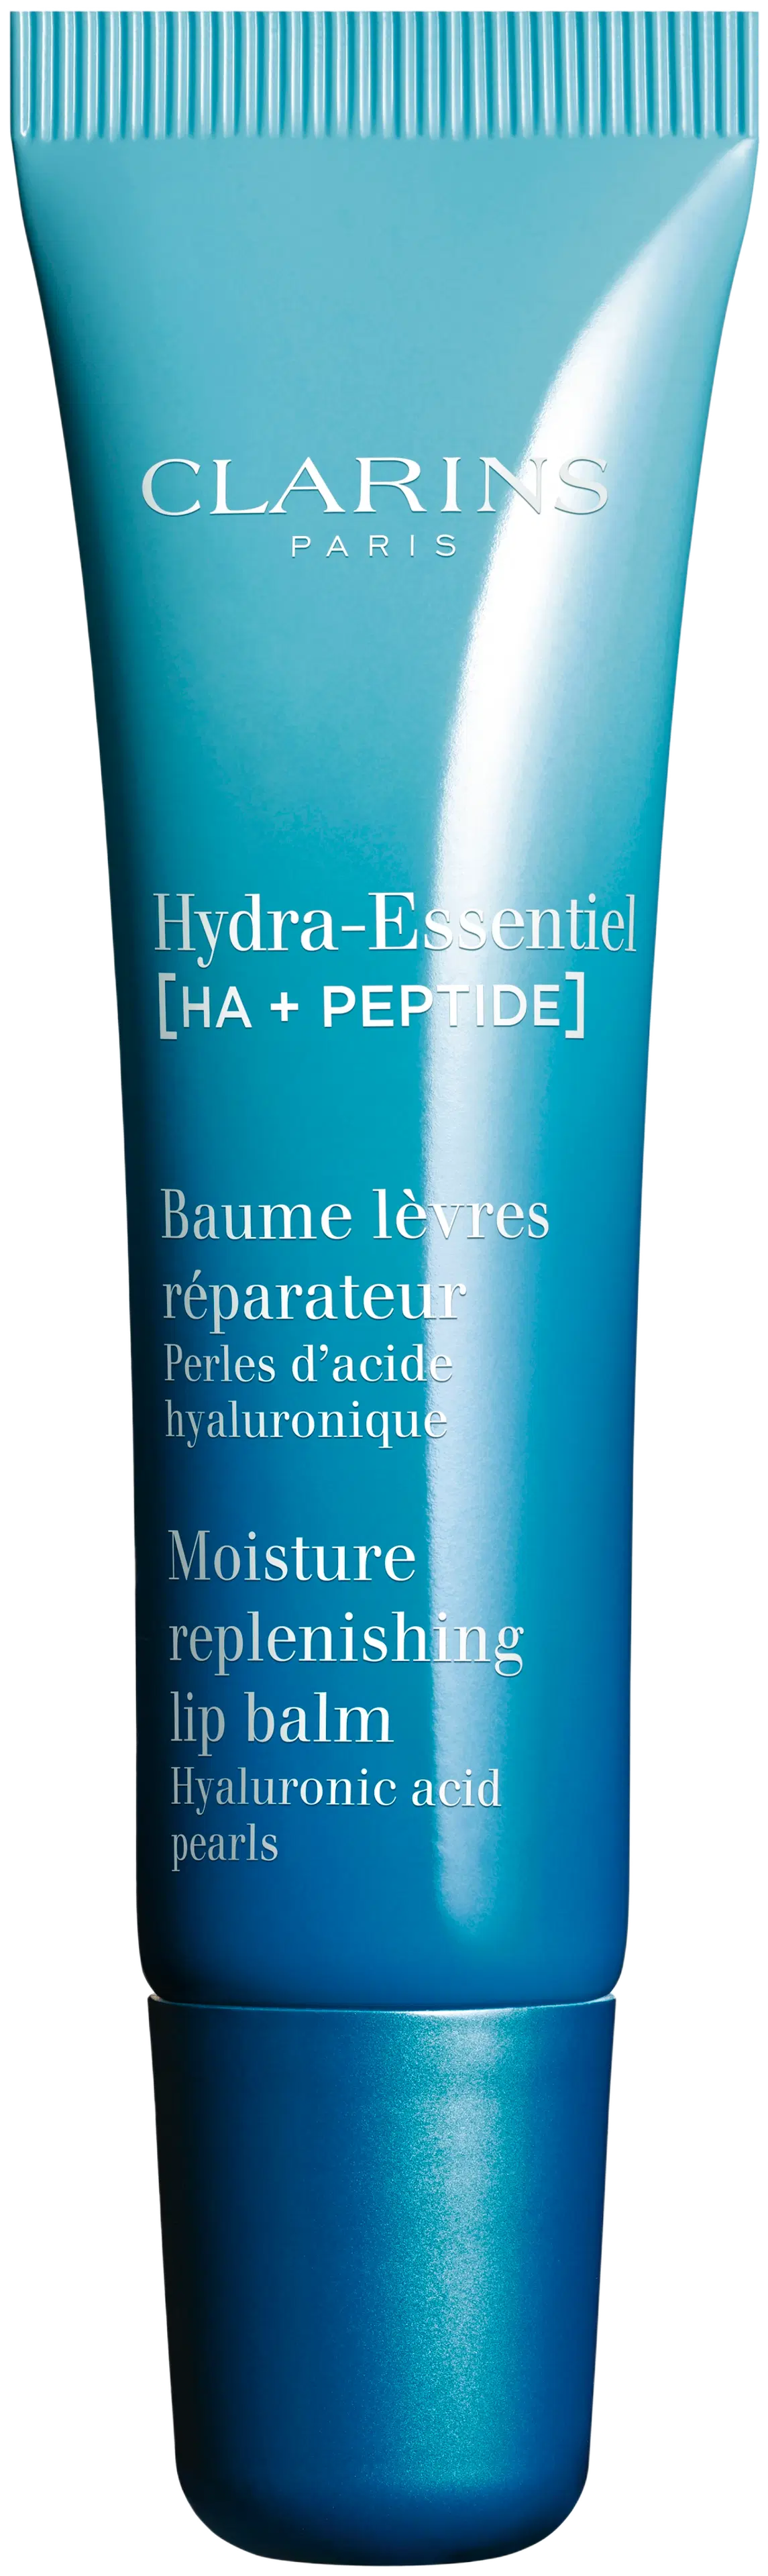 Clarins Hydra-Essentiel [HA2 + PEPTIDE] Moisture Replenishing Lip Balm huulivoide 15 ml 